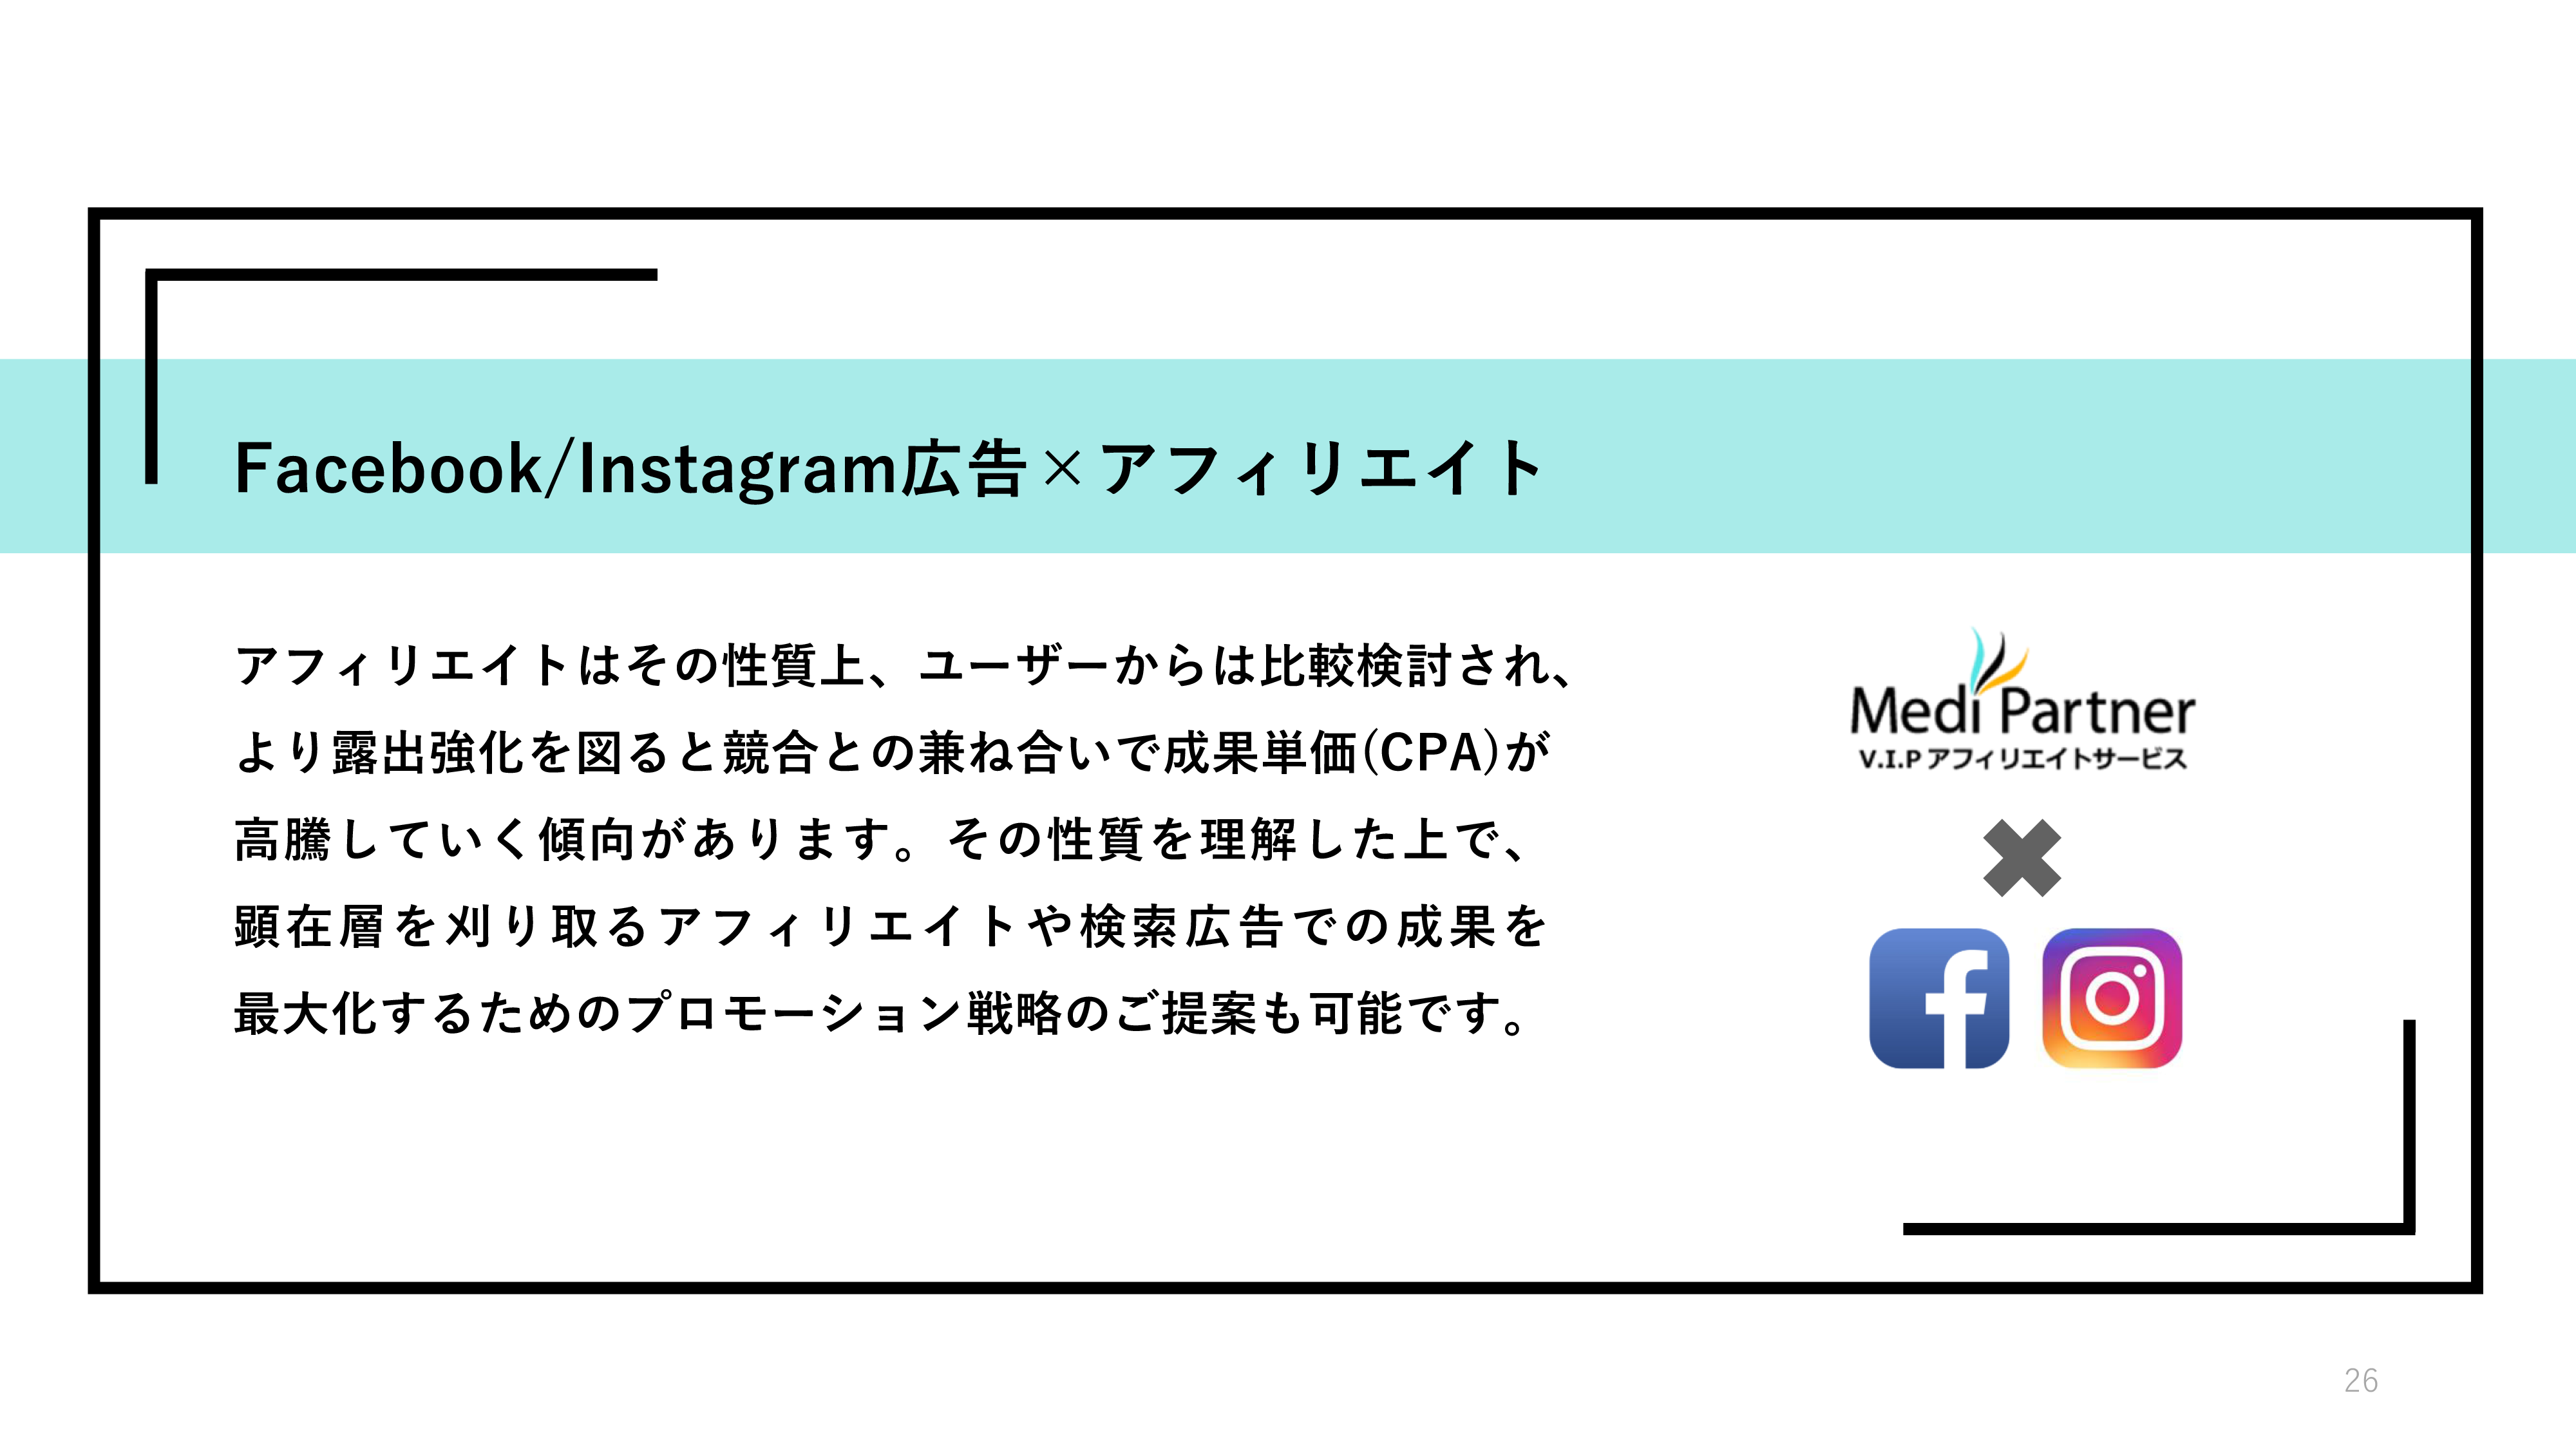 Facebook/Instagram広告×アフィリエイト